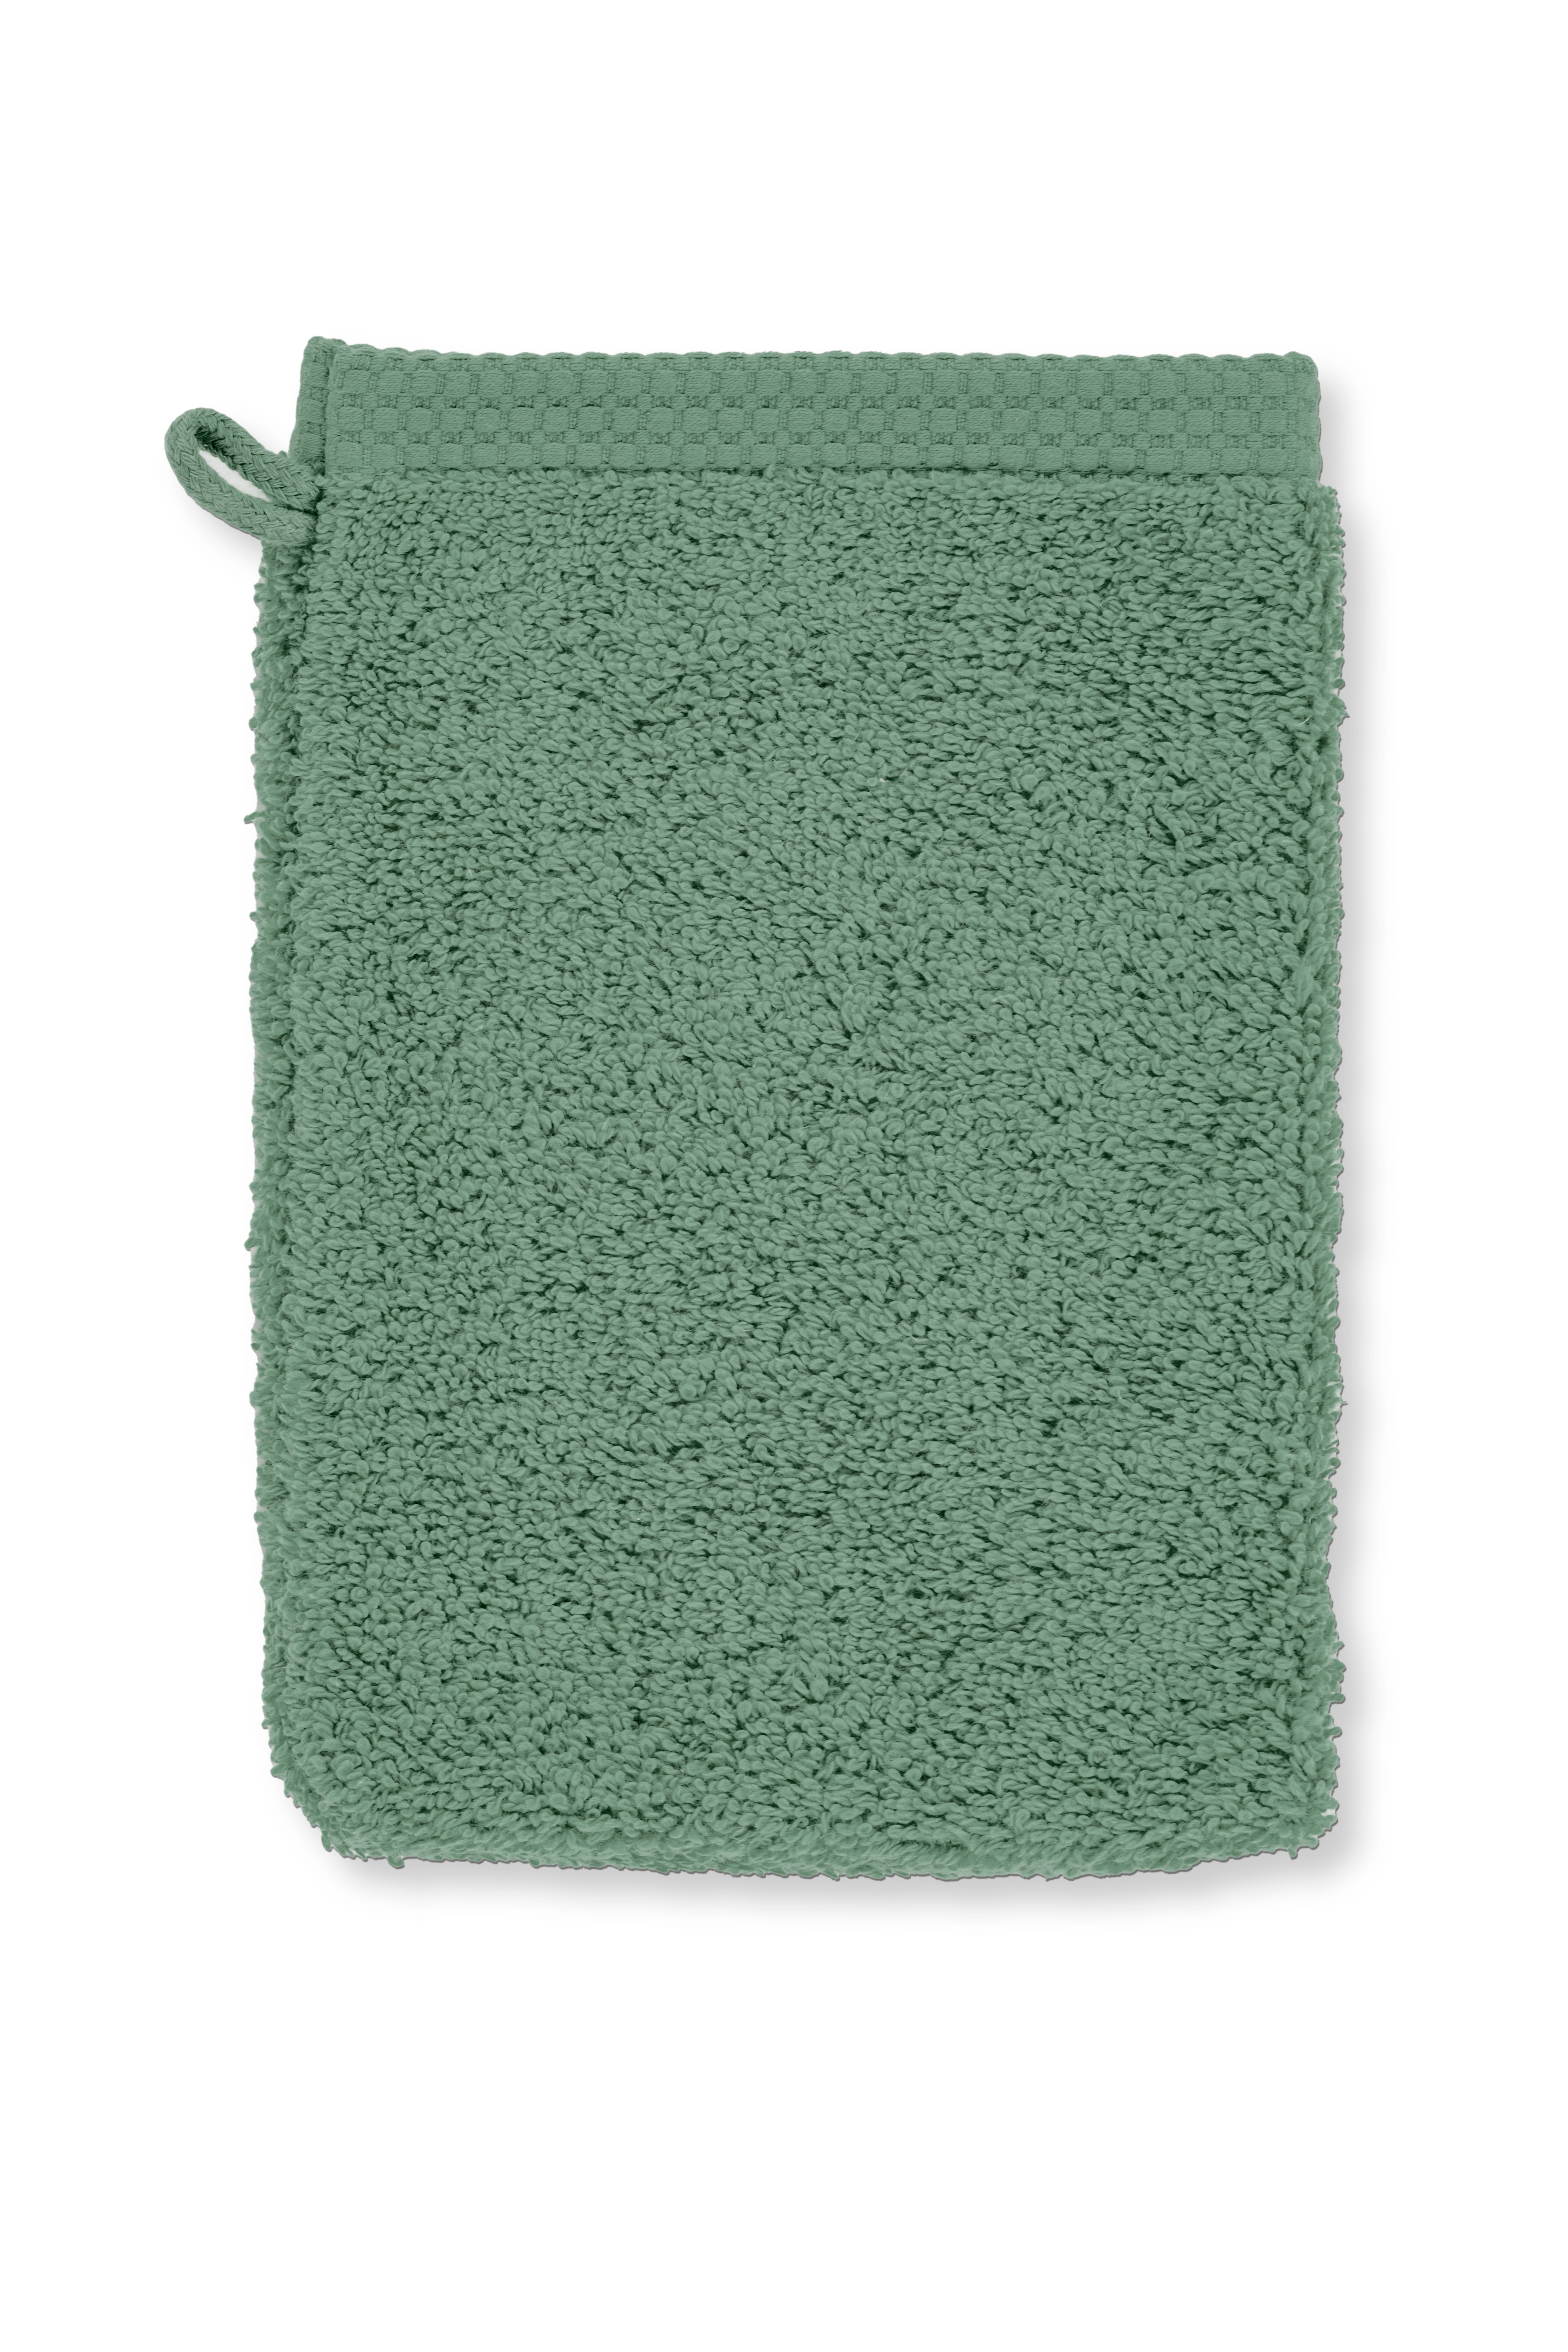 Washing glove DELUX 15x21cm - set/2, stone green